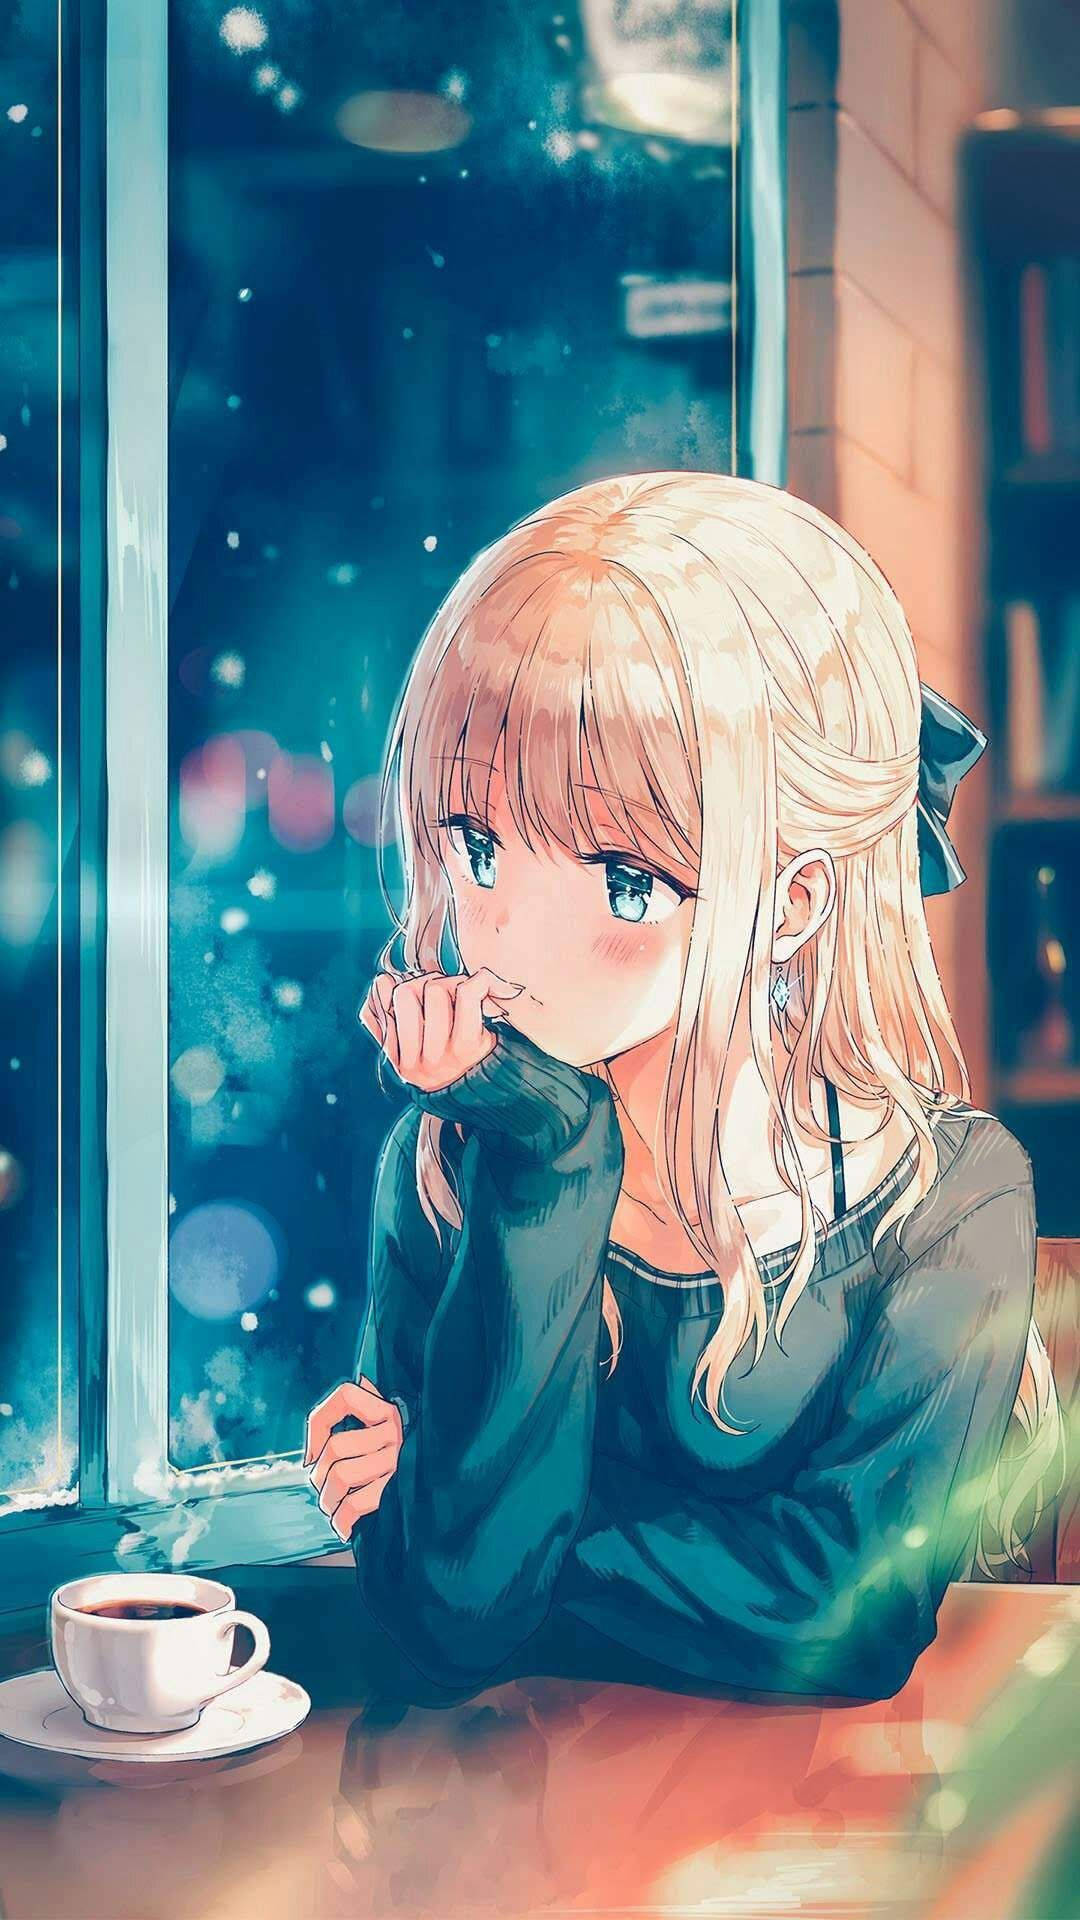 Depressed Anime Girl Having Coffee